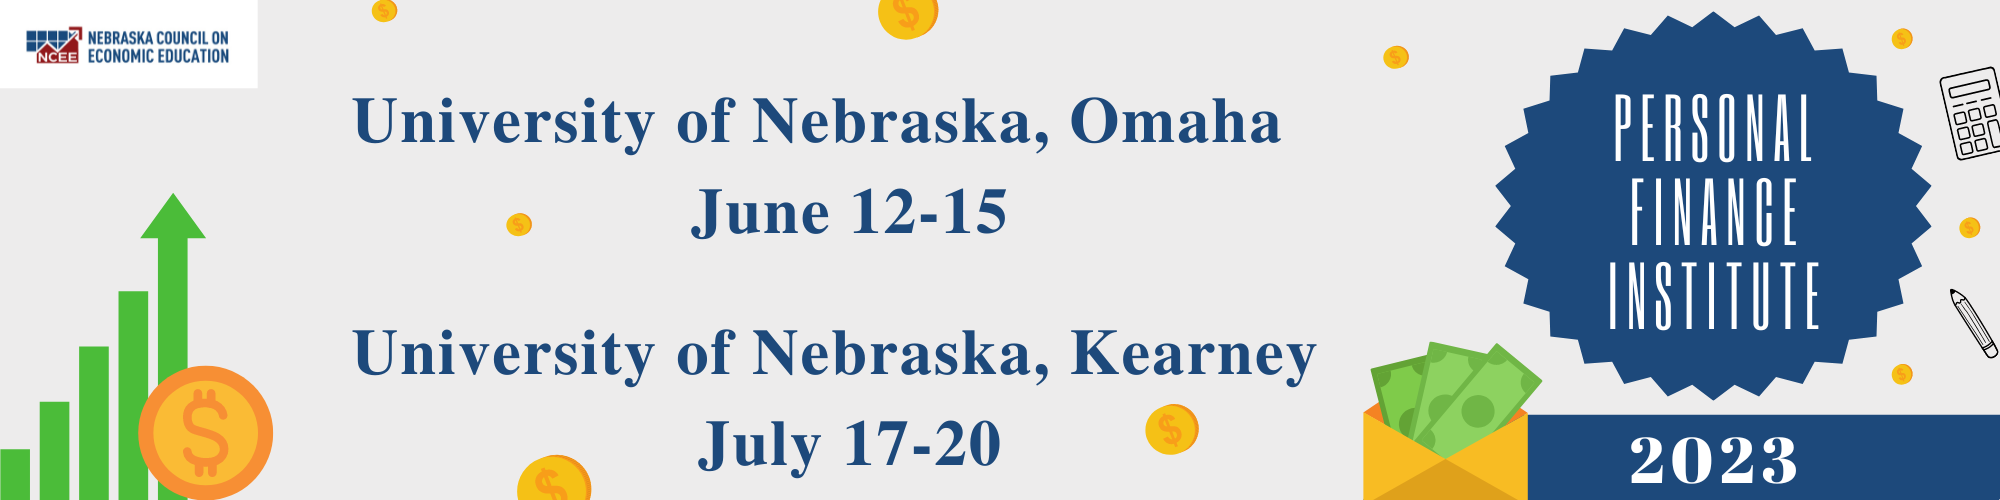 Personal Finance Institute. University of Nebraska, Omaha and Kearney 2023.